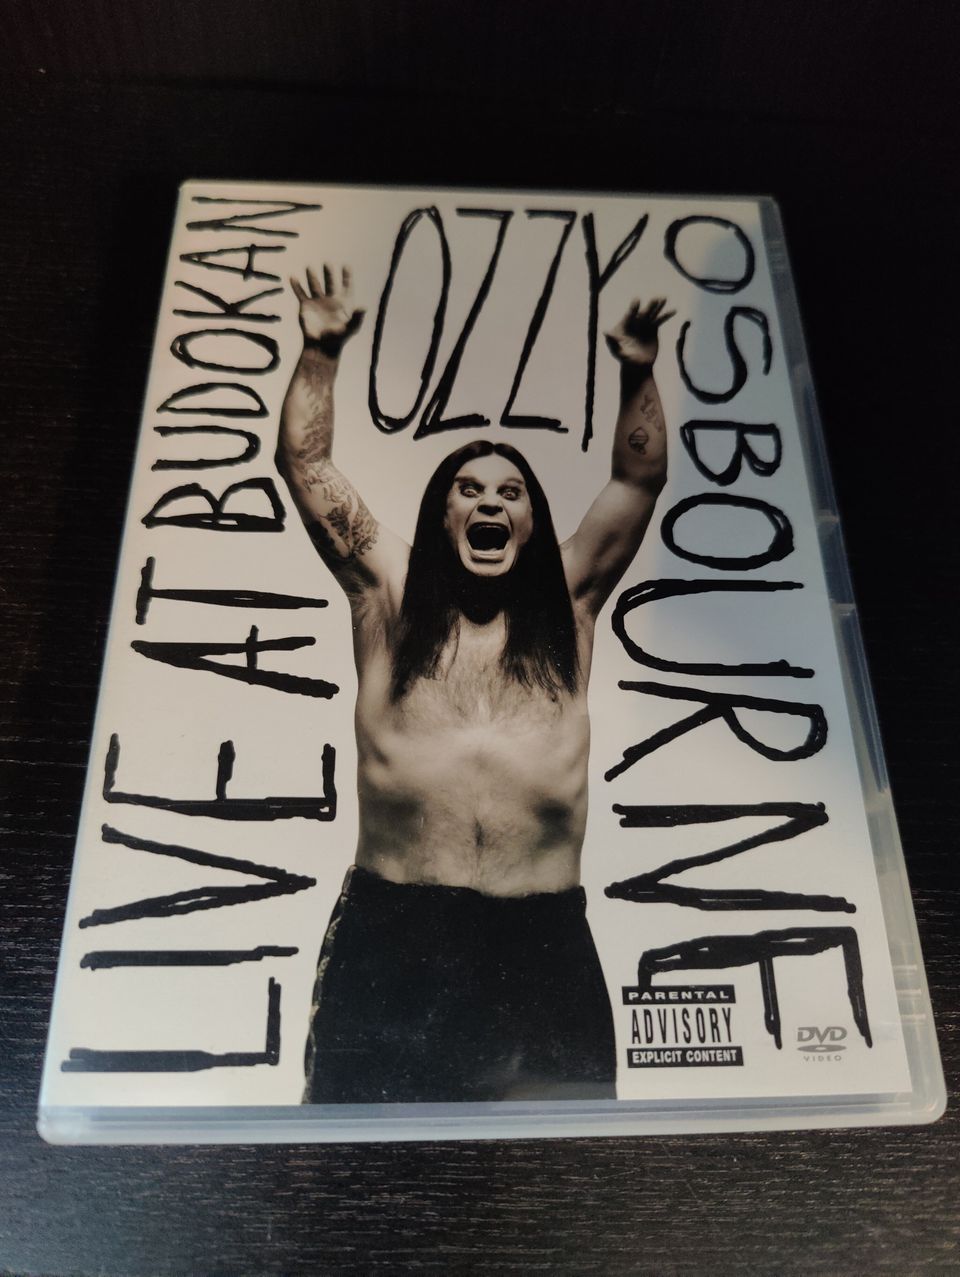 Ozzy Osbourne live at budokan DVD / CD